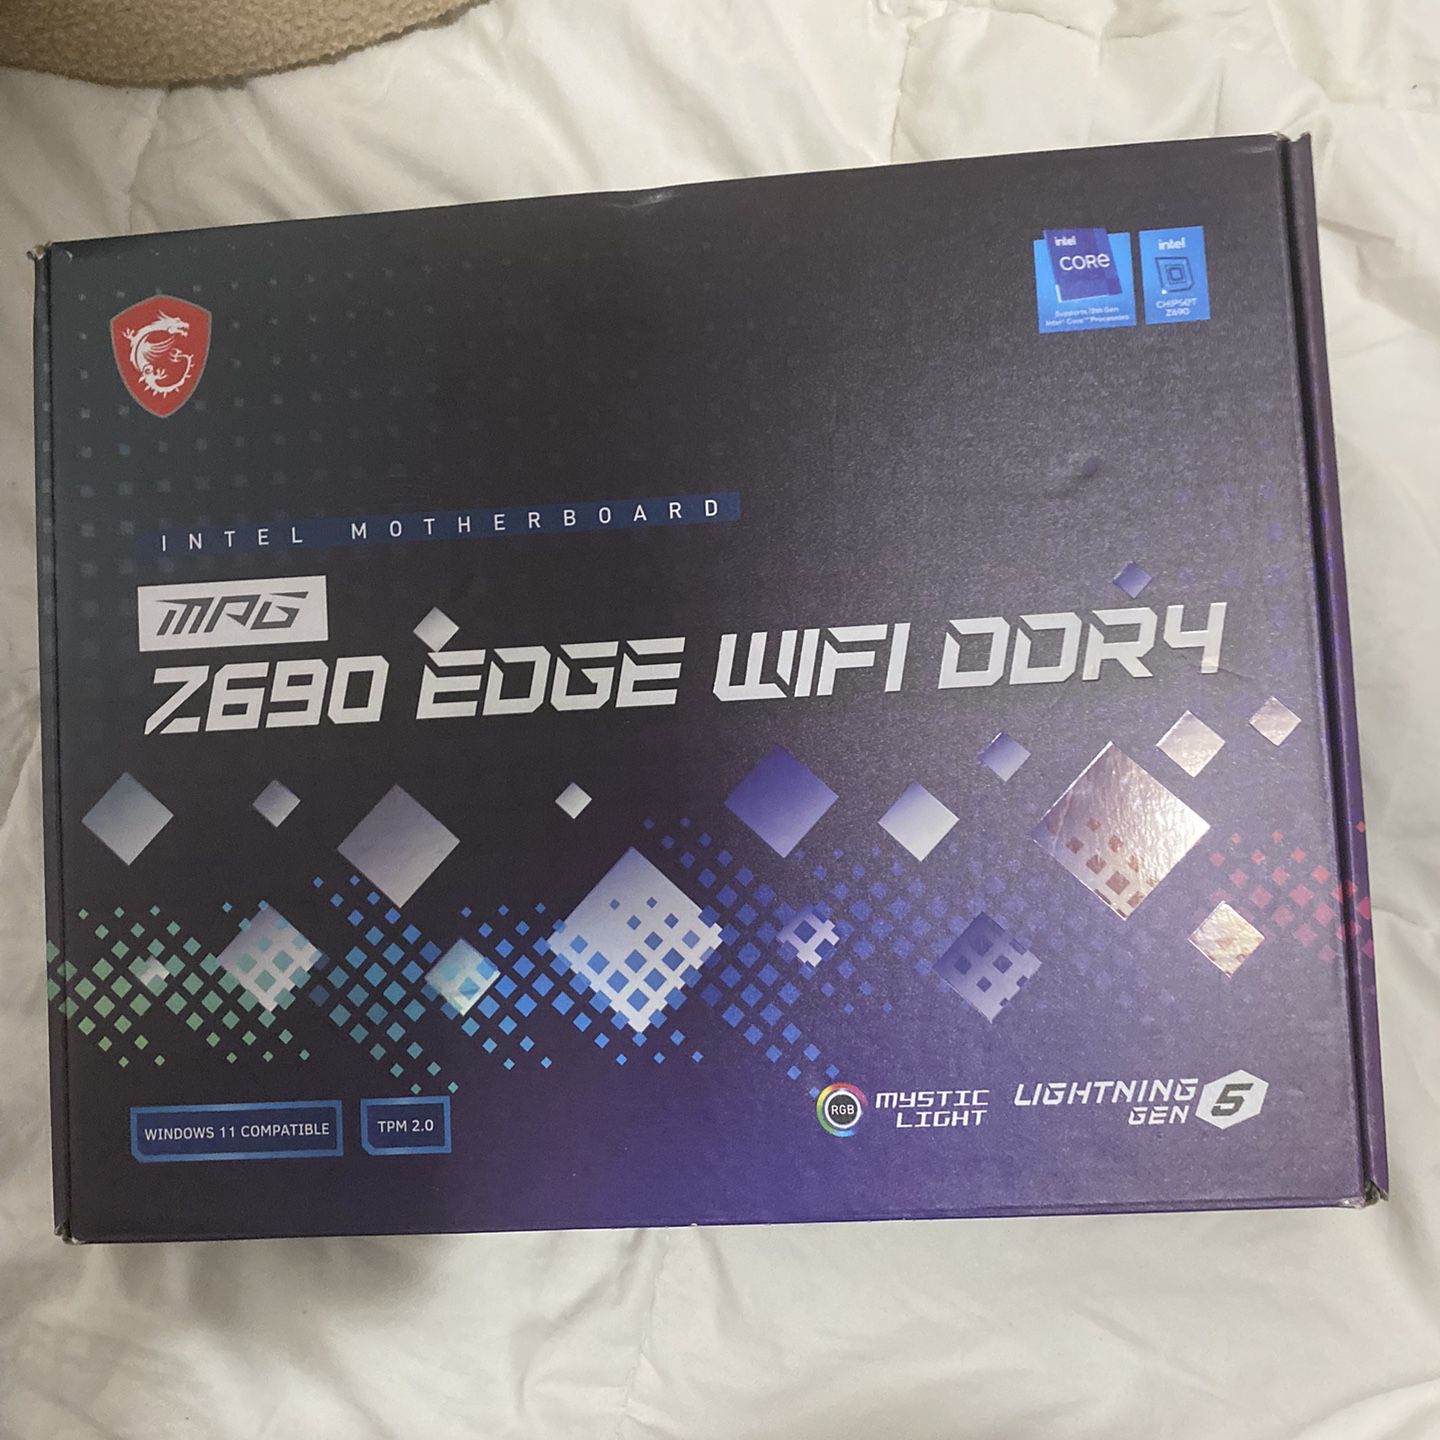 Z690 EDGE wIFI DDR4